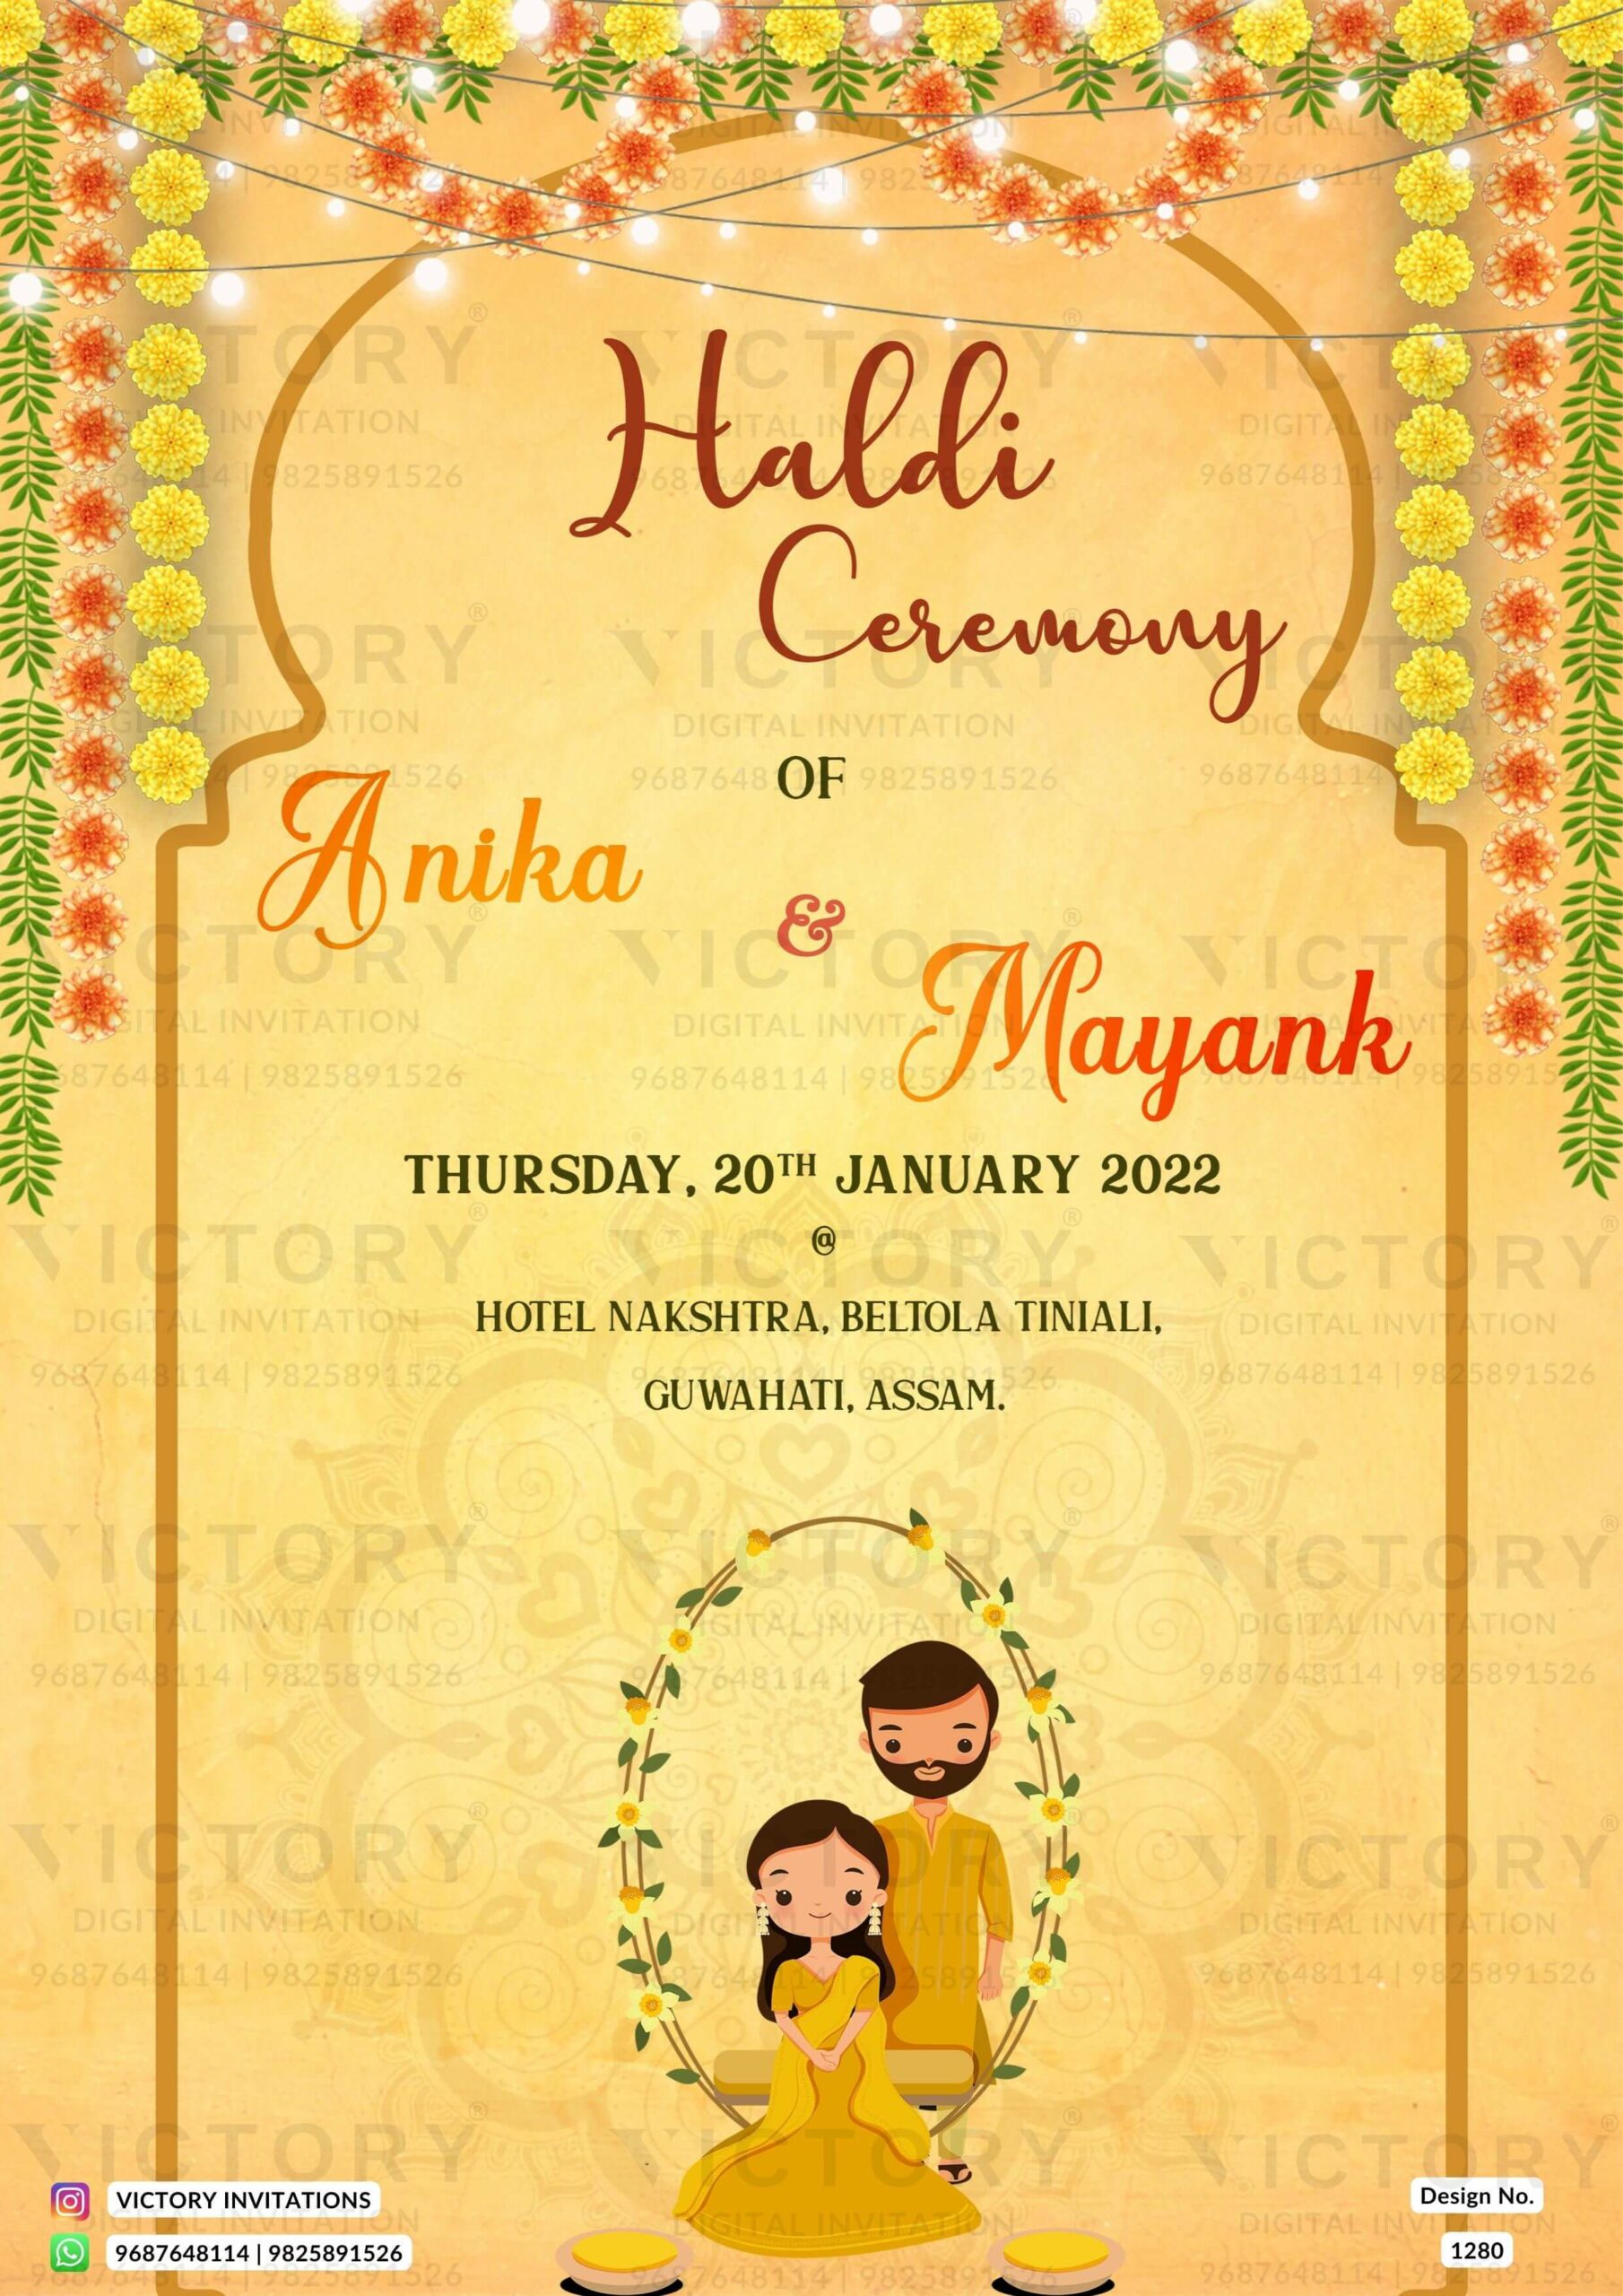 haldi ceremony digital invitation card design number 1280